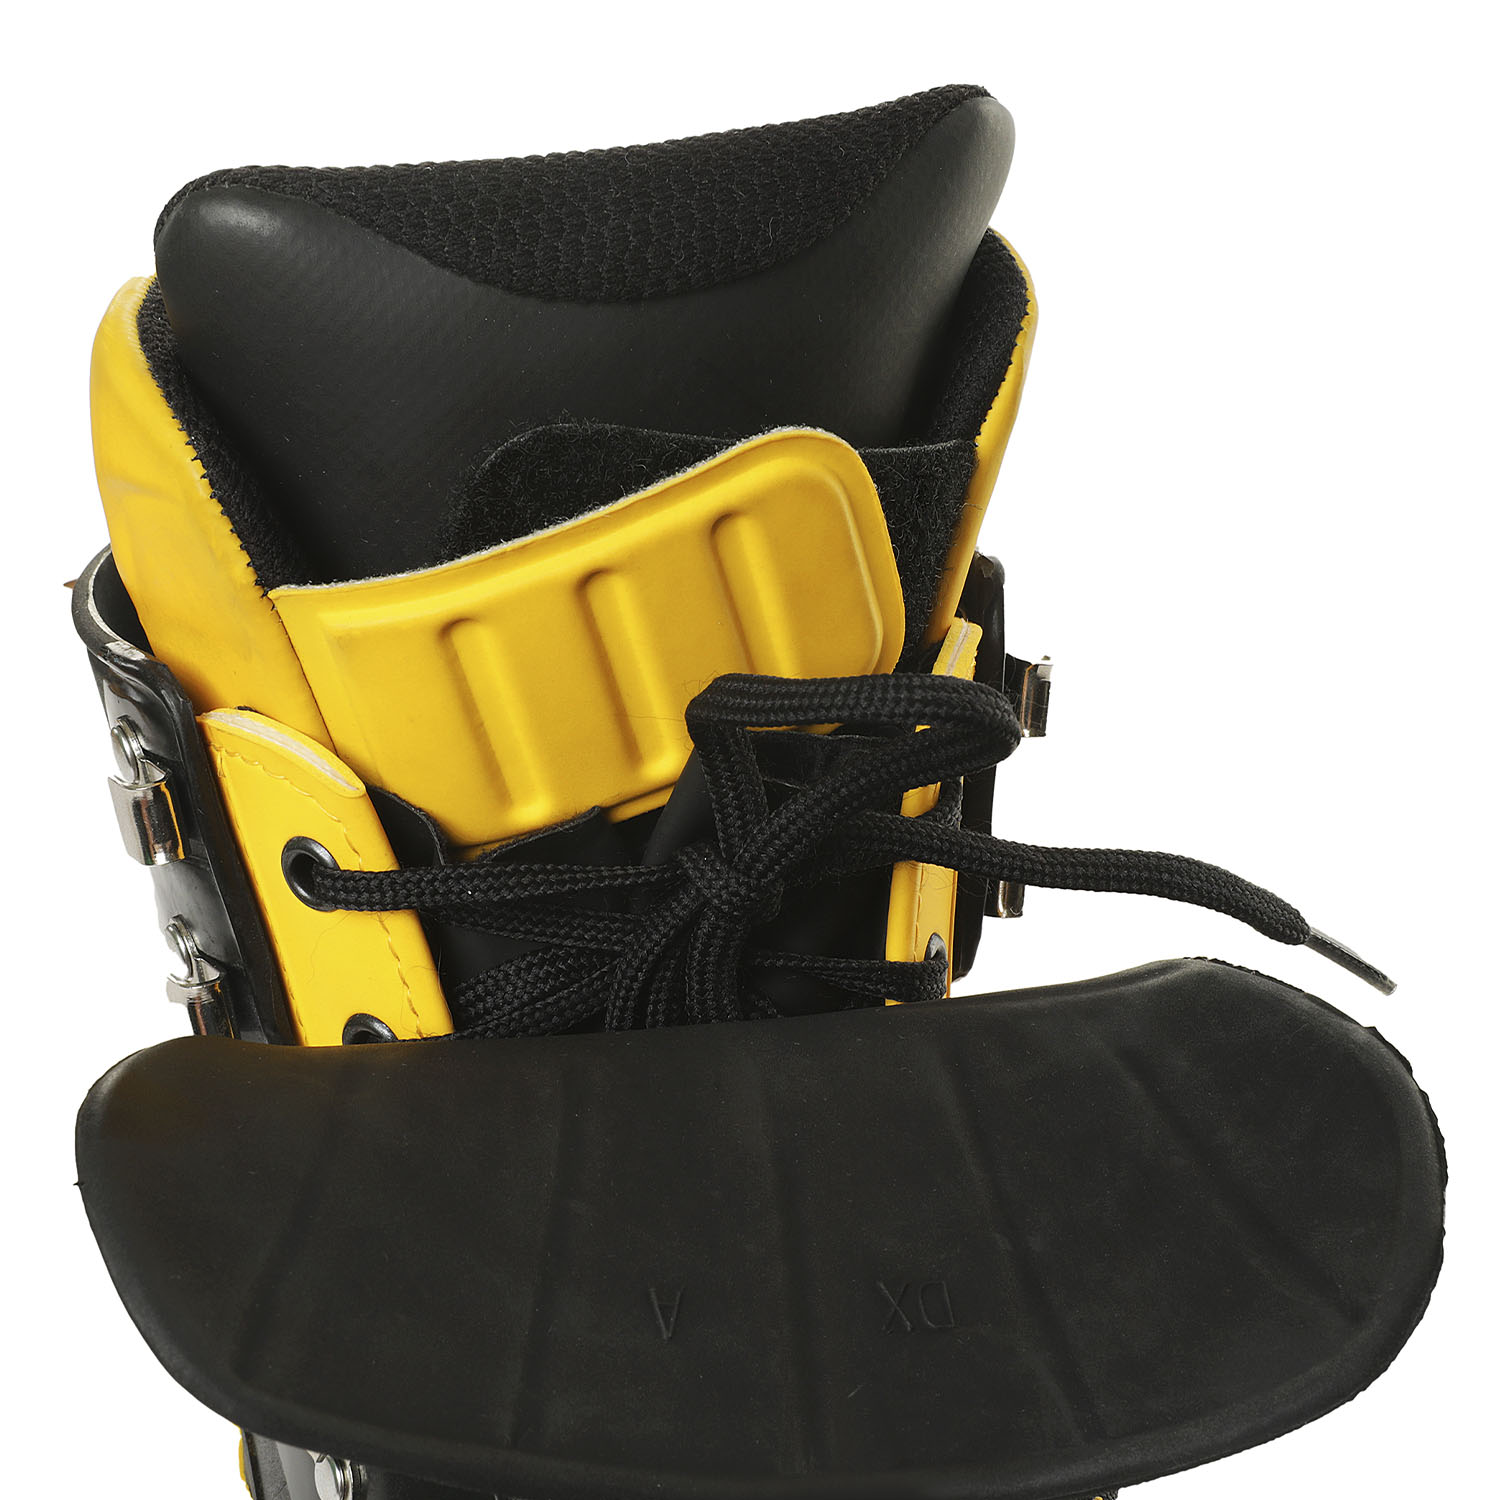 Ботинки Asolo Alpine AFS 8000 Evo Black/Yellow